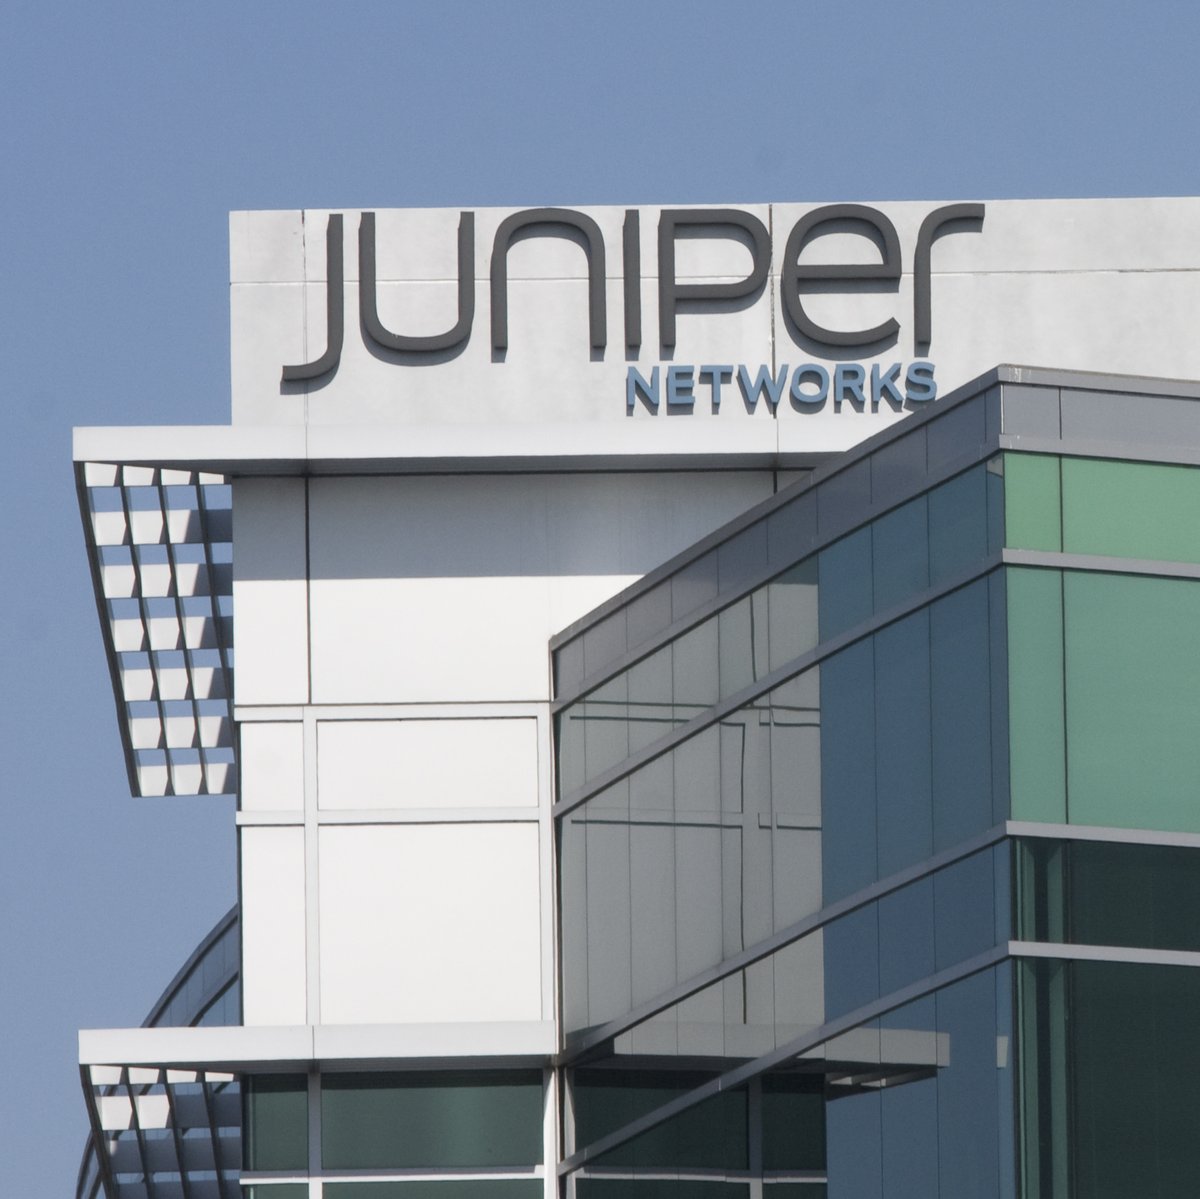 Hewlett Packard Enterprise wants to acquire Juniper Networks for